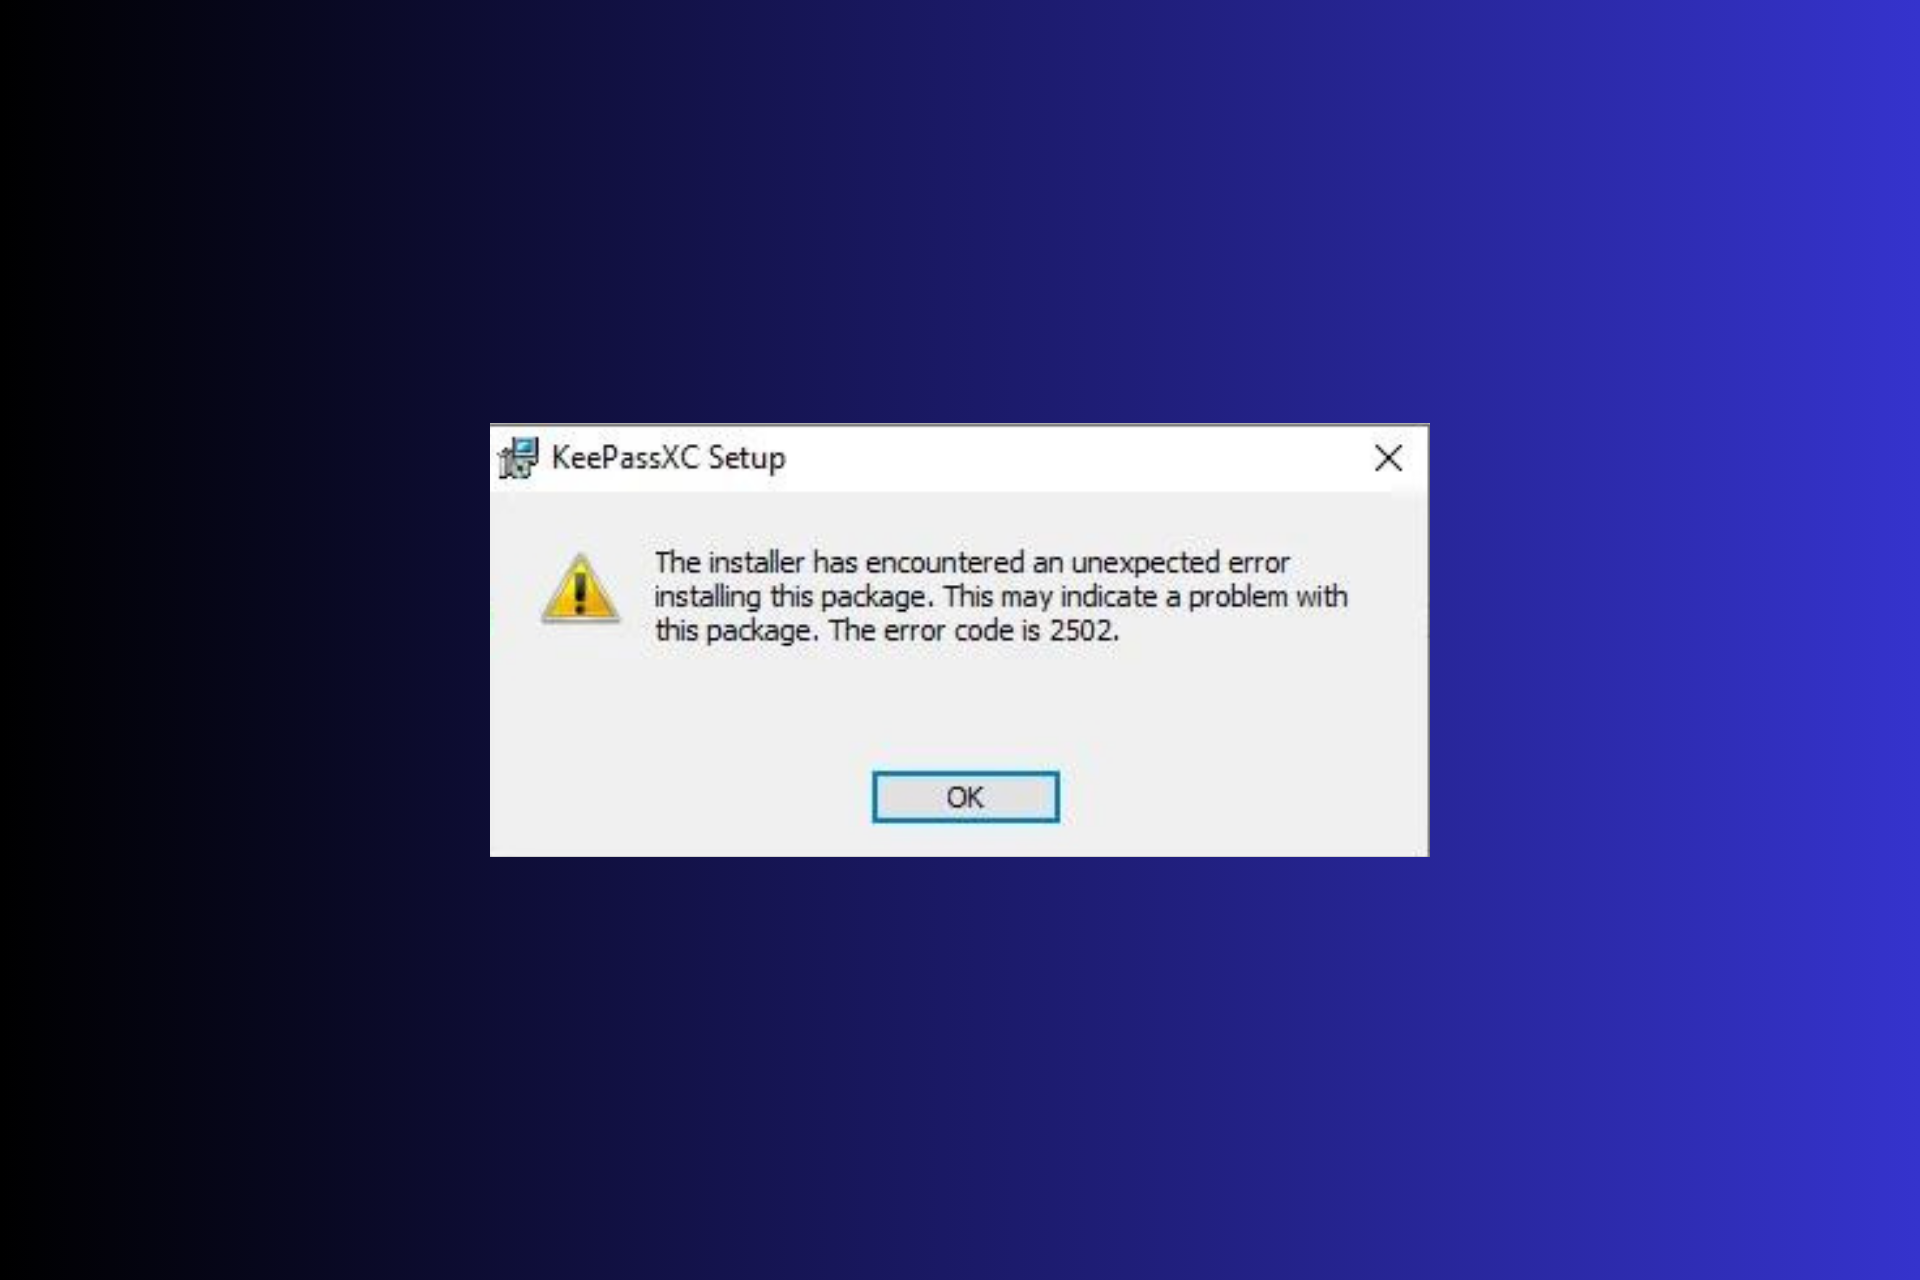 Fix Epic Games Launcher login errors on Windows 11/10